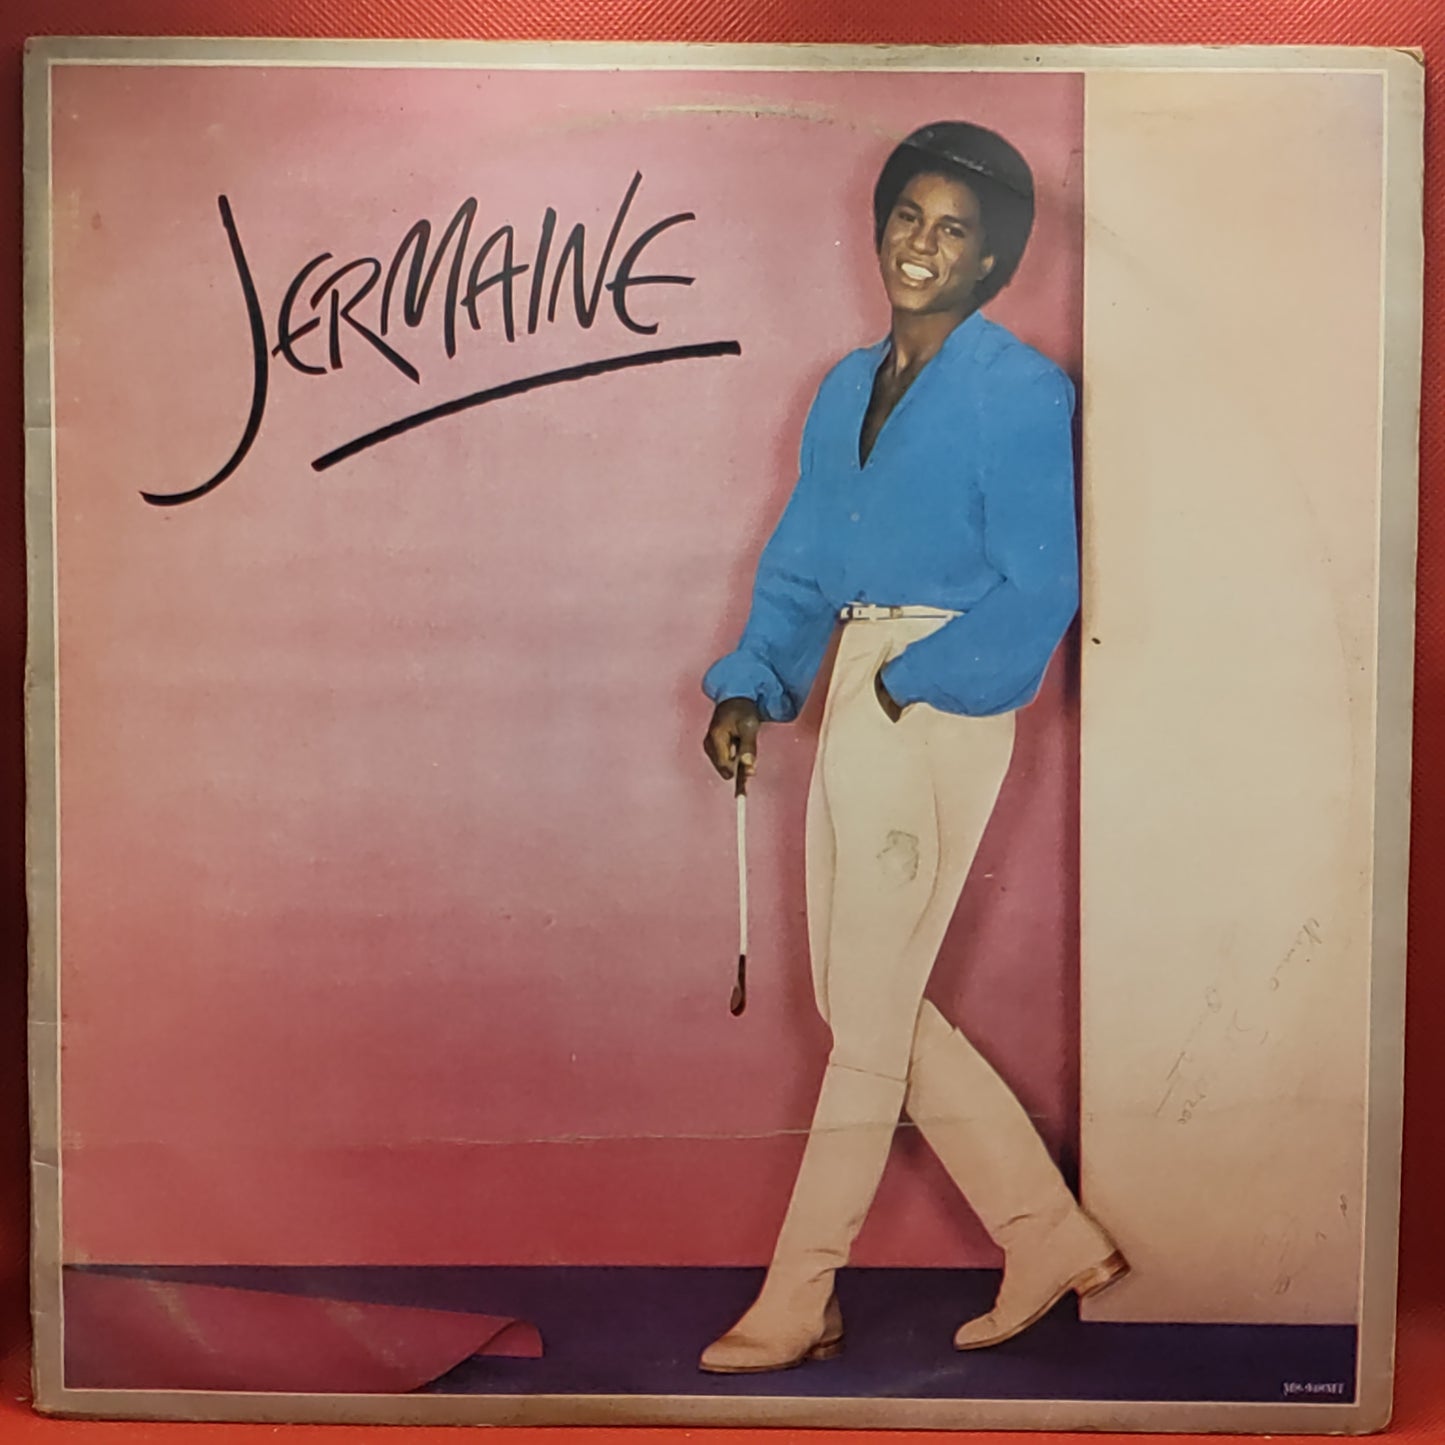 Jermaine Jackson – Jermaine